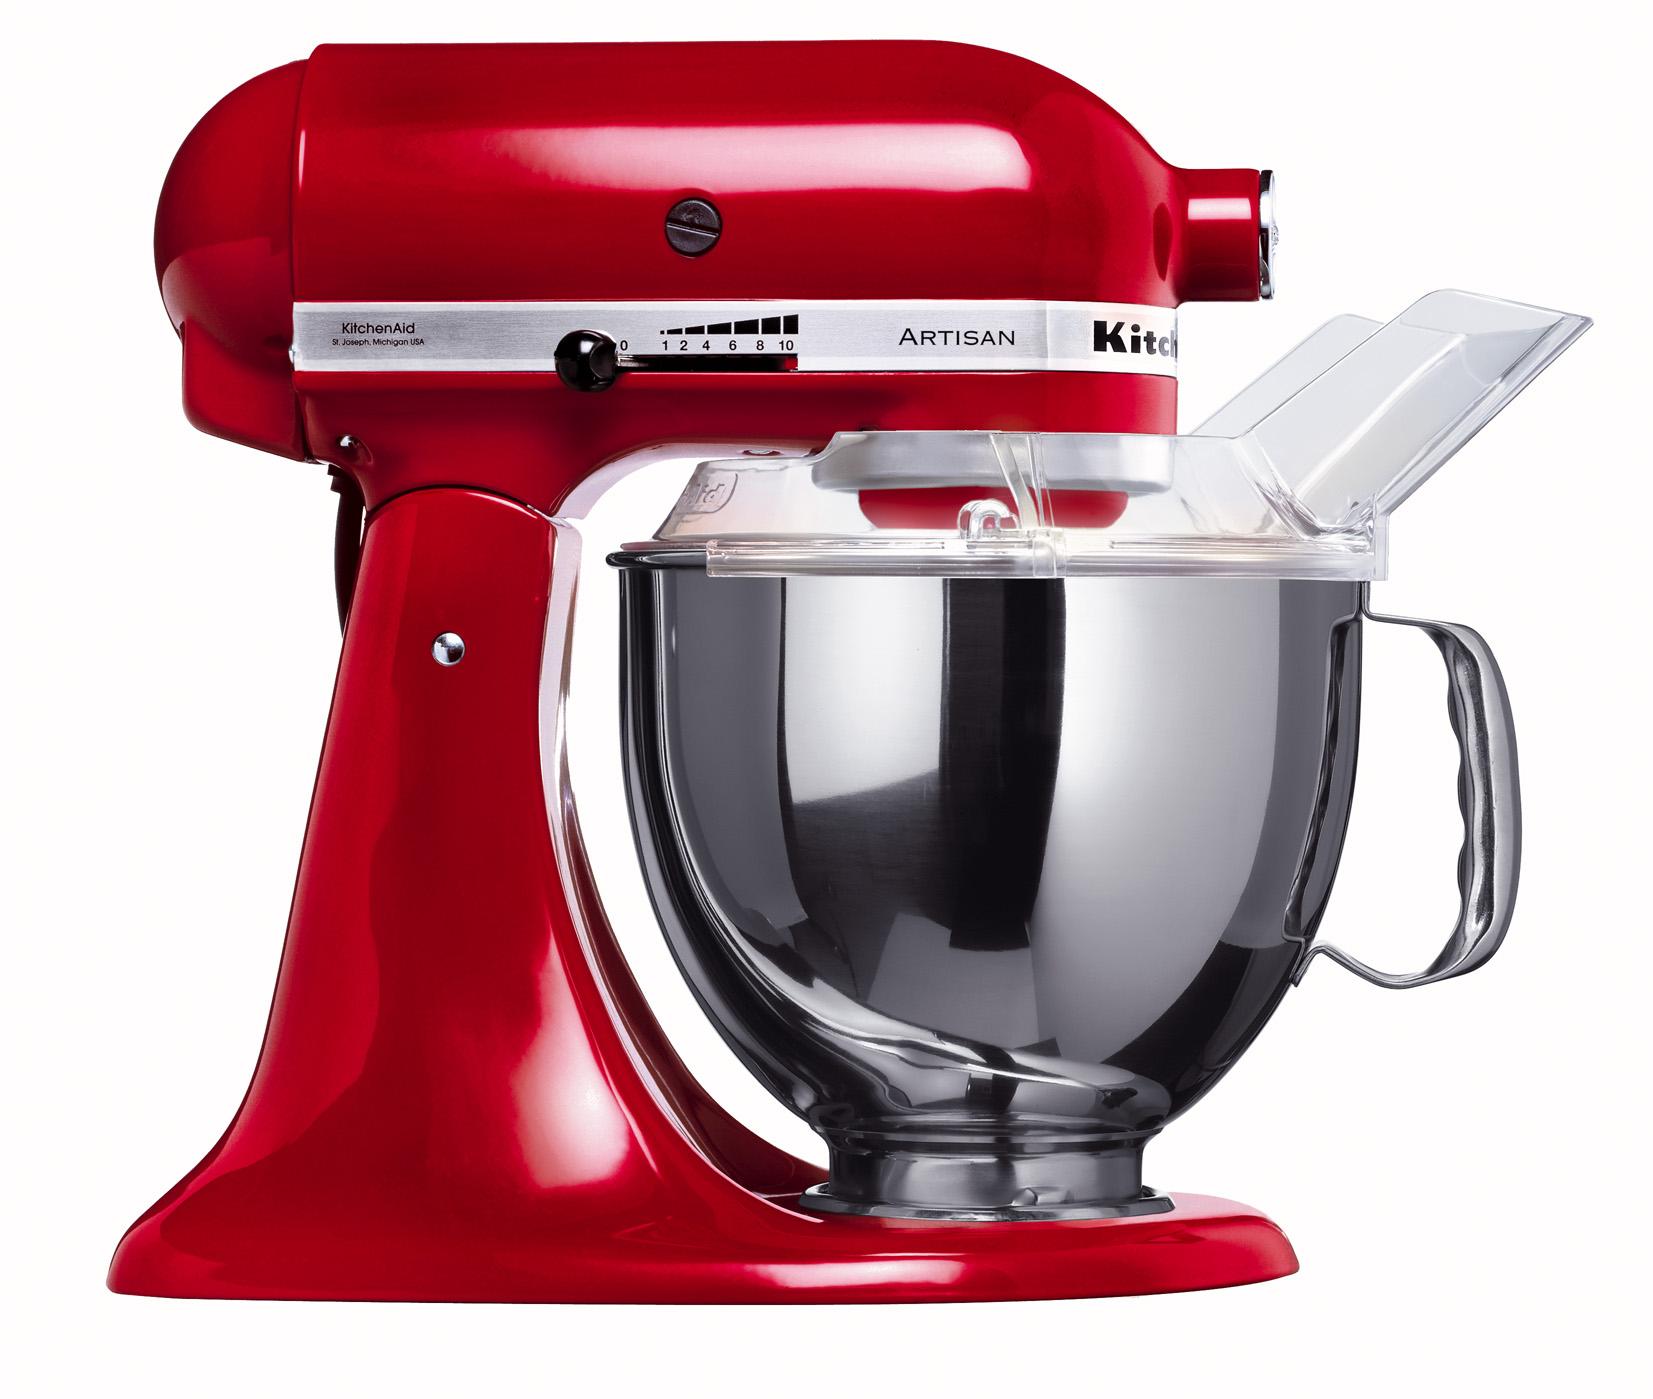 Foto KitchenAid Robot de Cocina Artisan rojo (H.Nr.: 5KSM150PSEER)